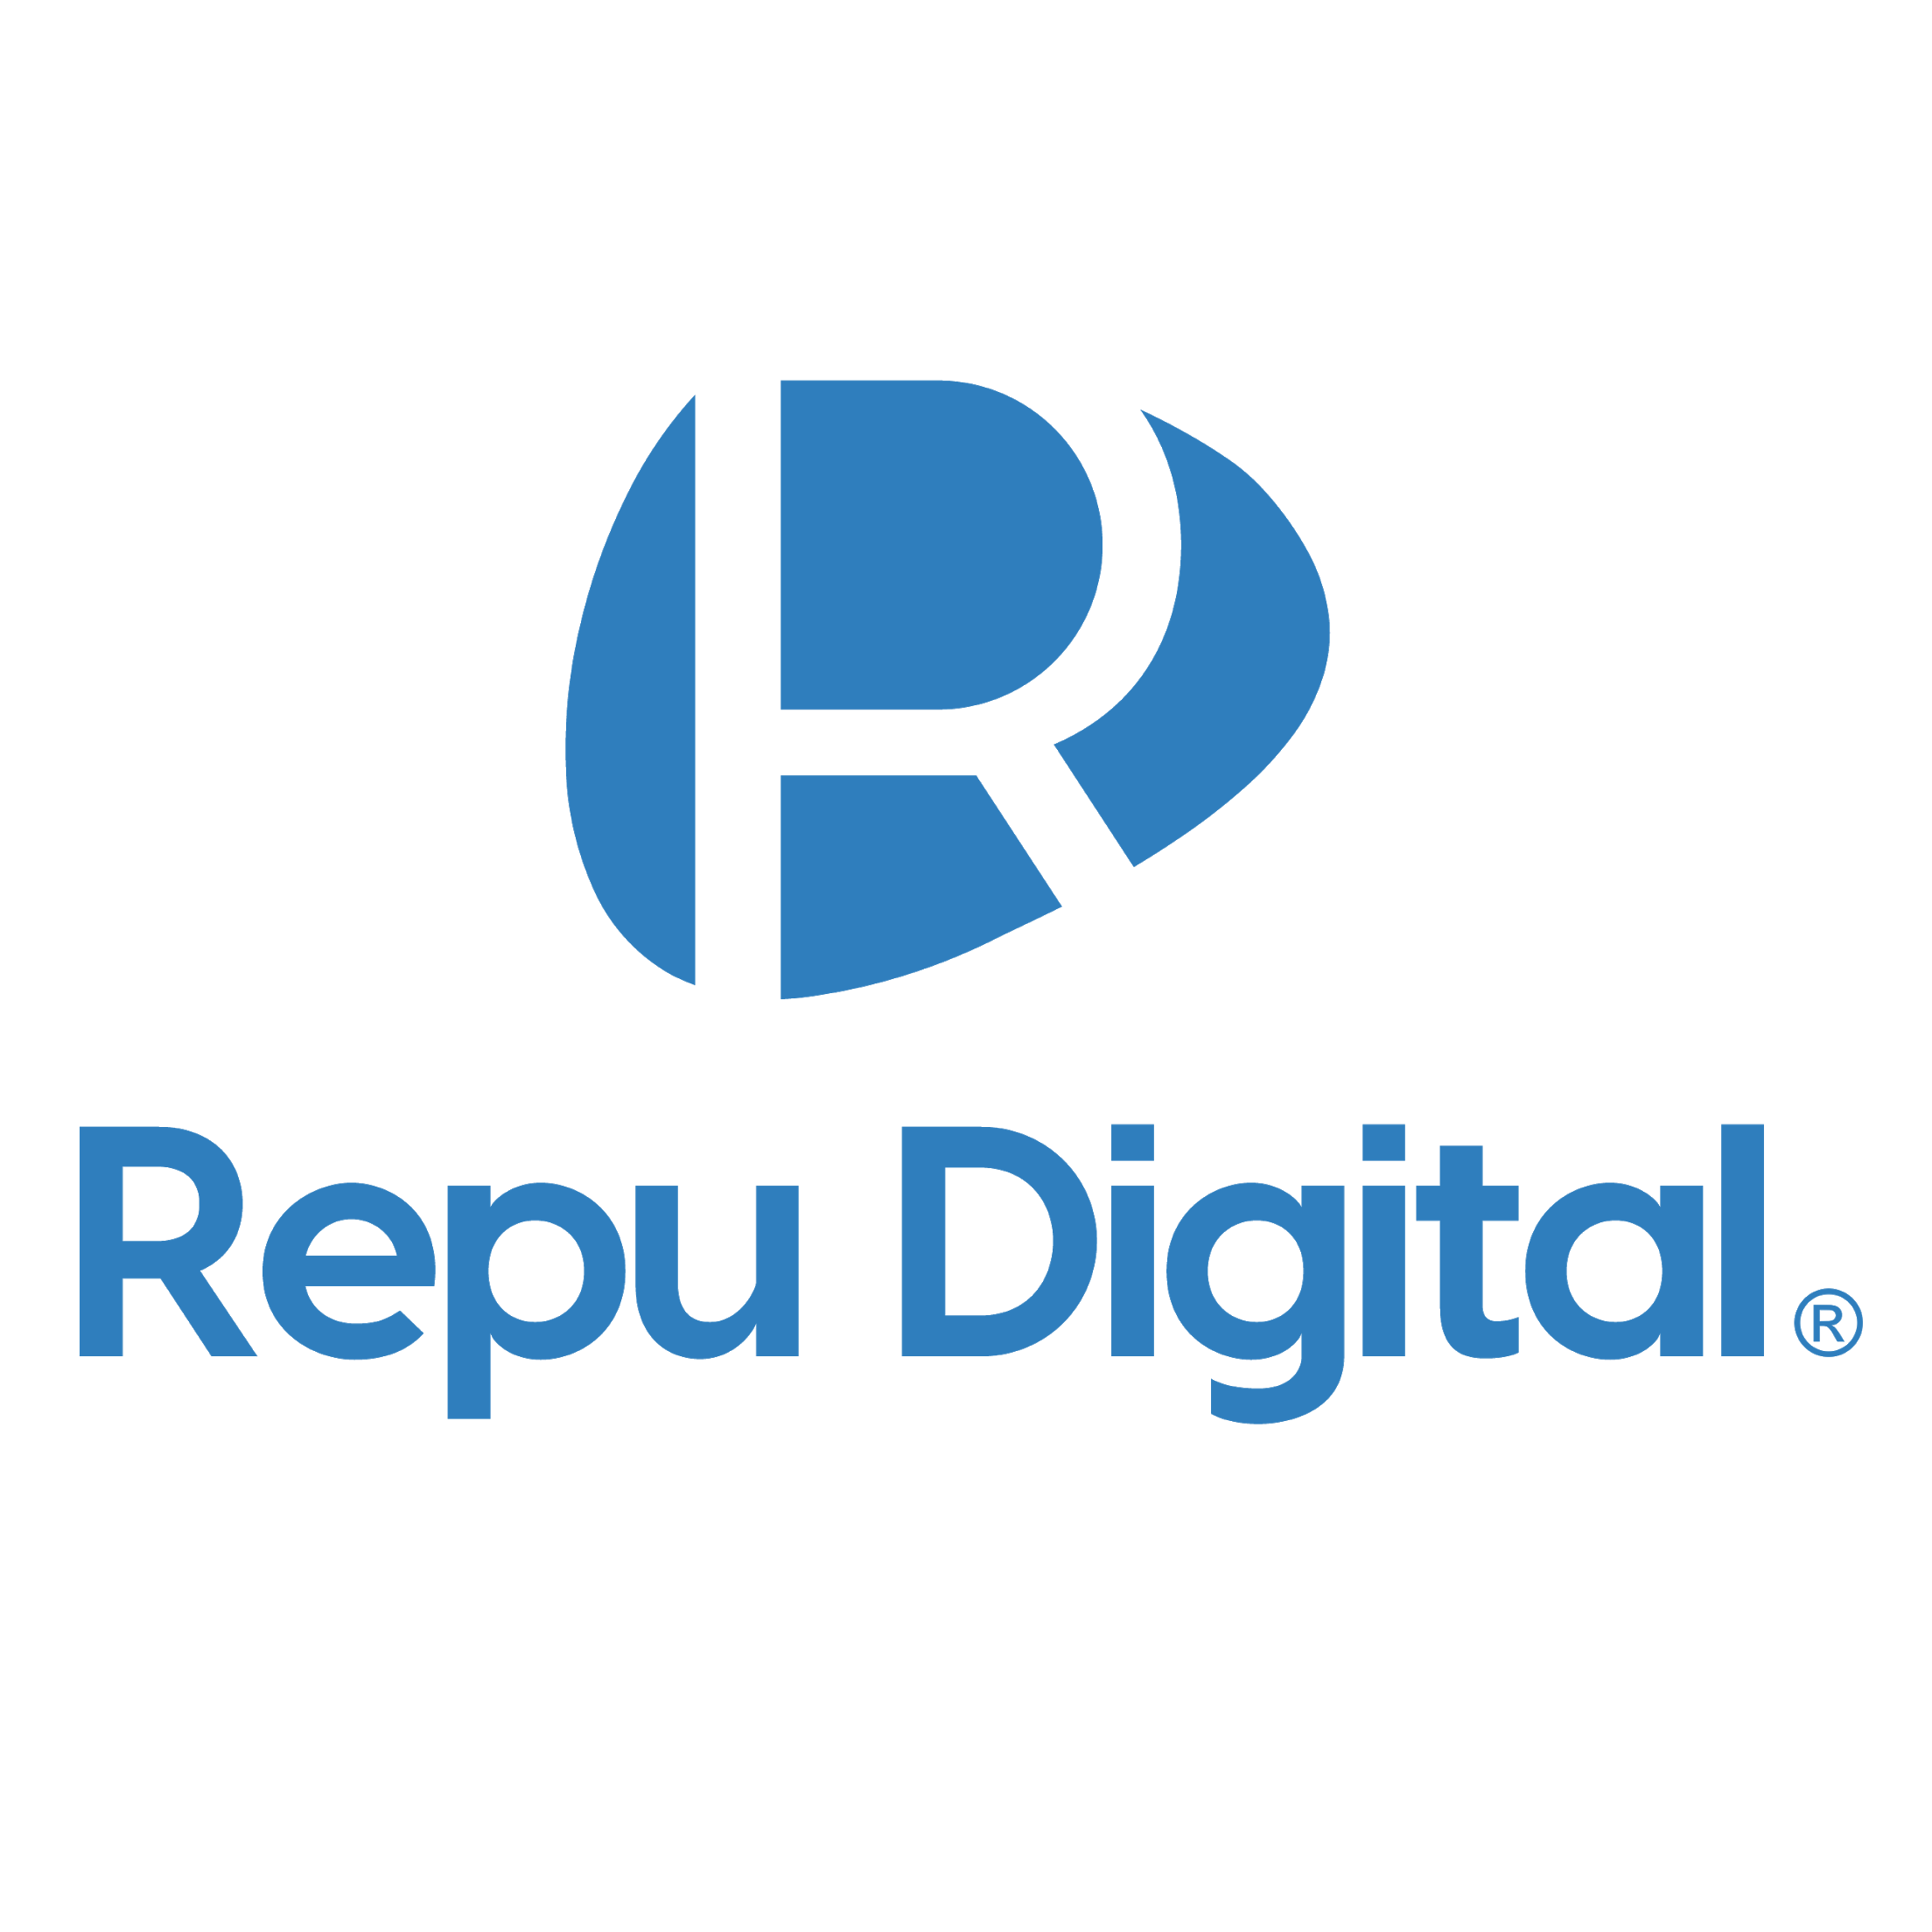 Repu Digital logo